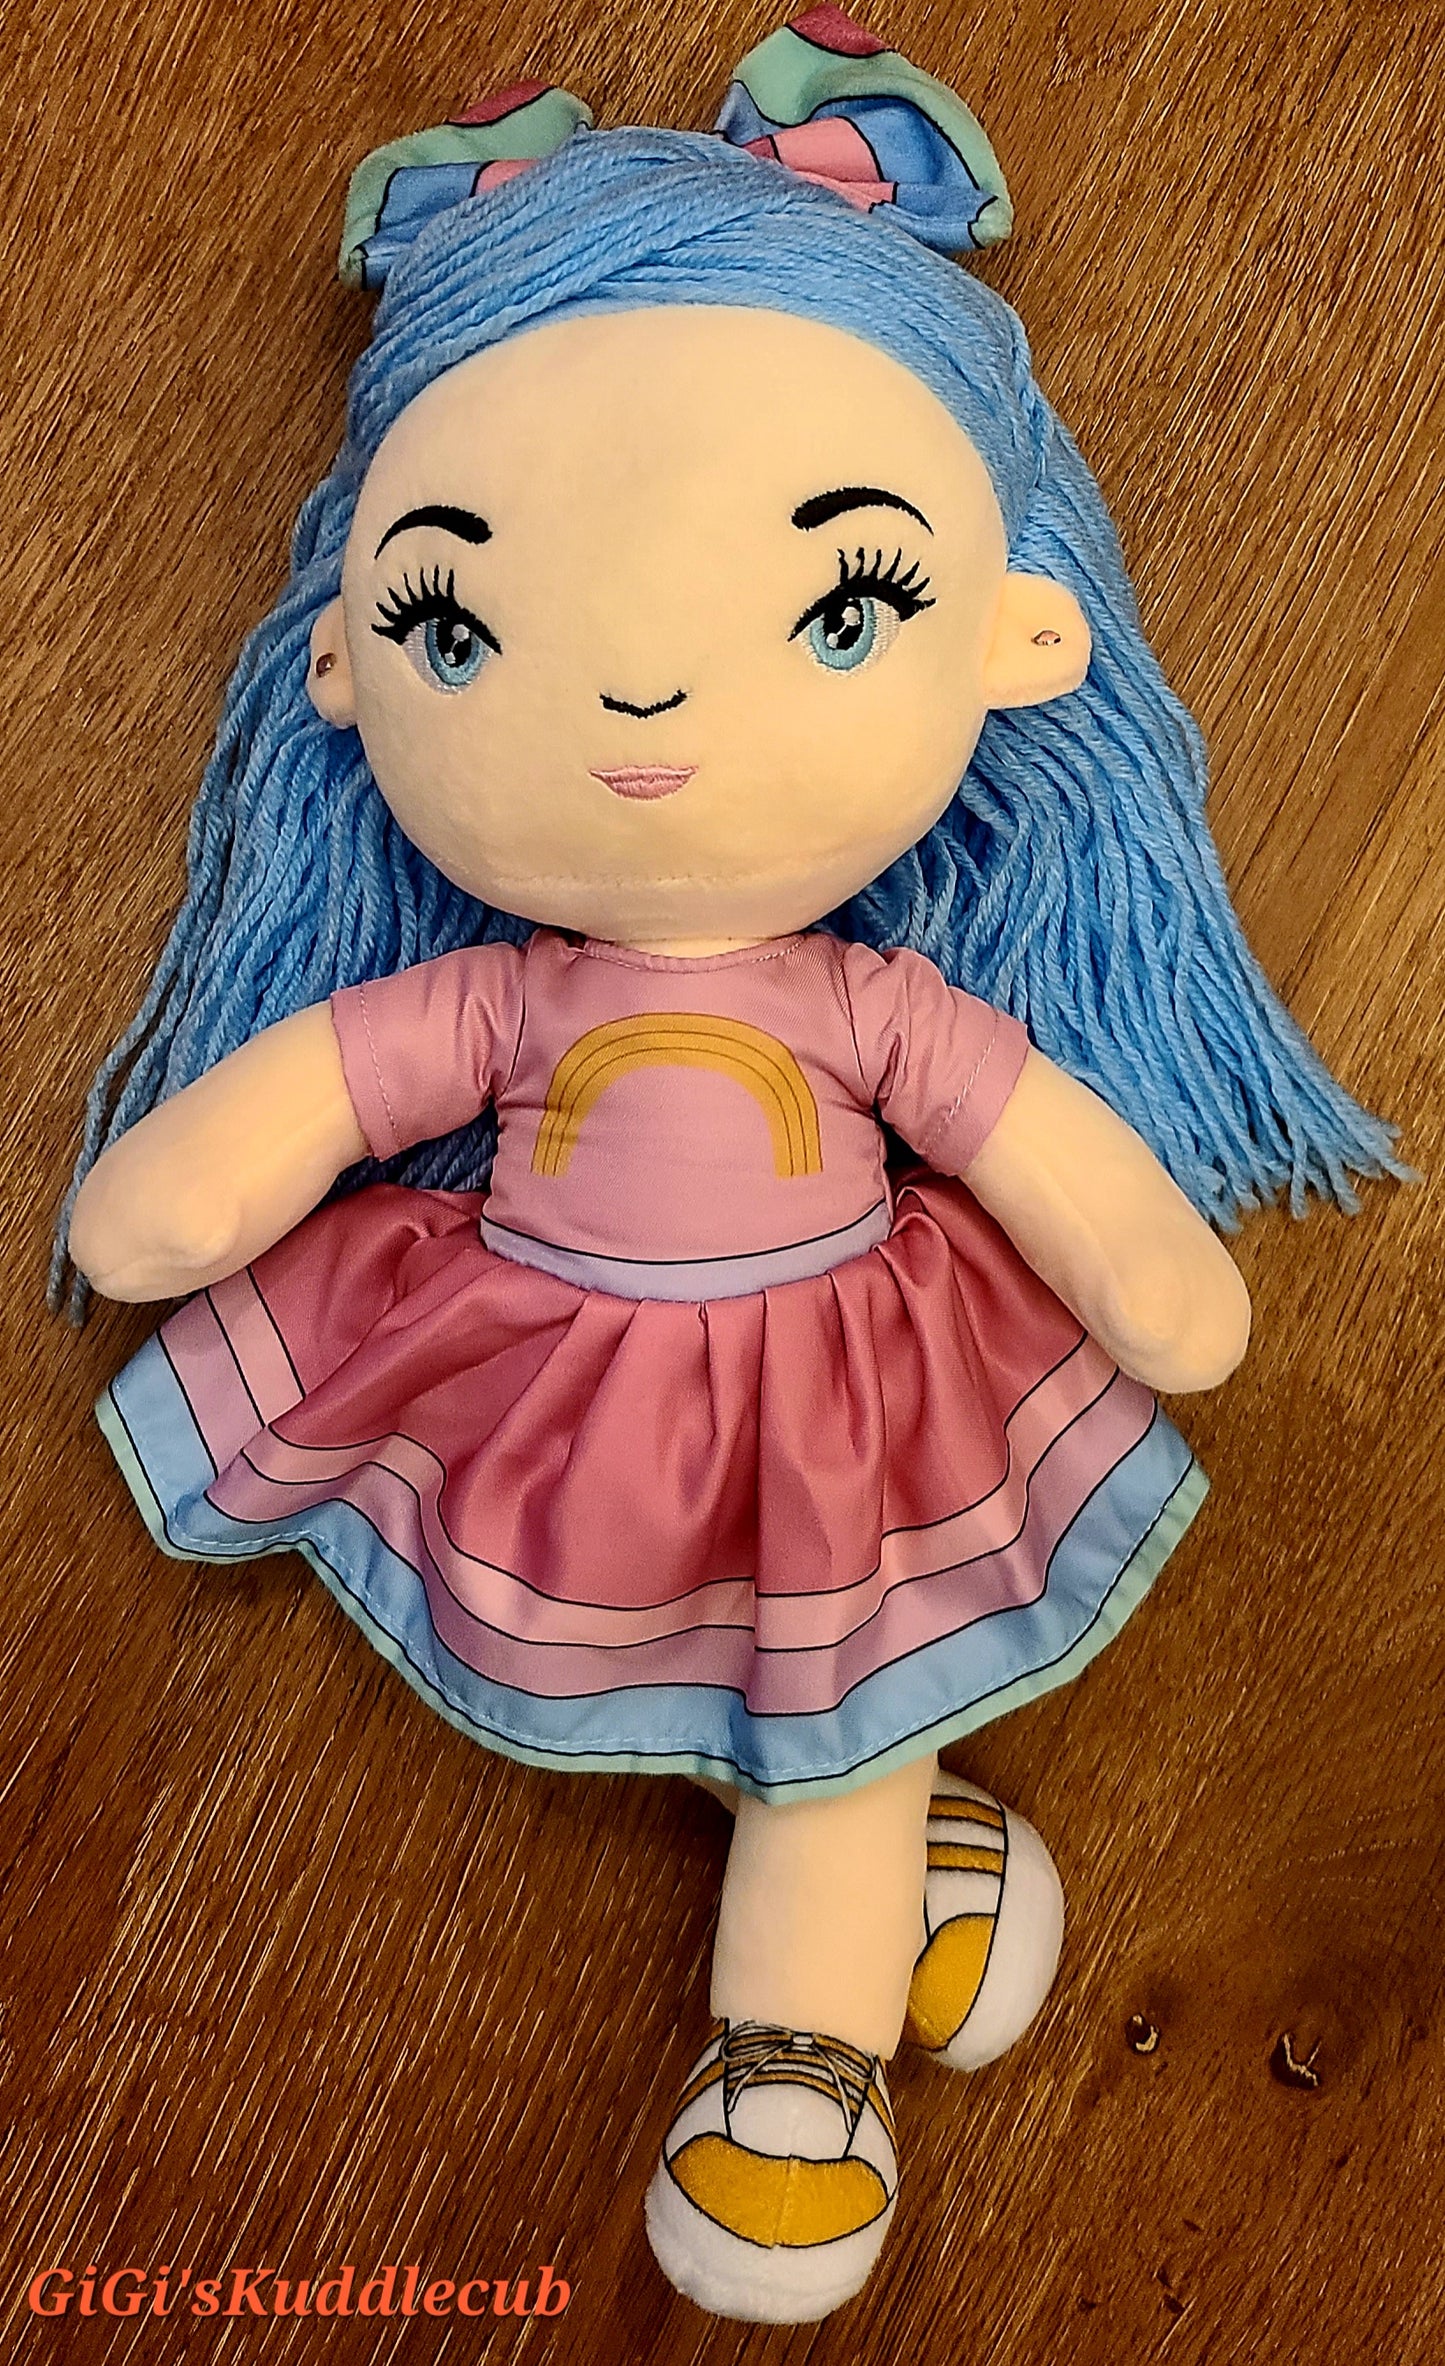 Soft Rag 14" Rainbow Fairy Girl Plush Rag Doll Toy With Blue Yarn Hair